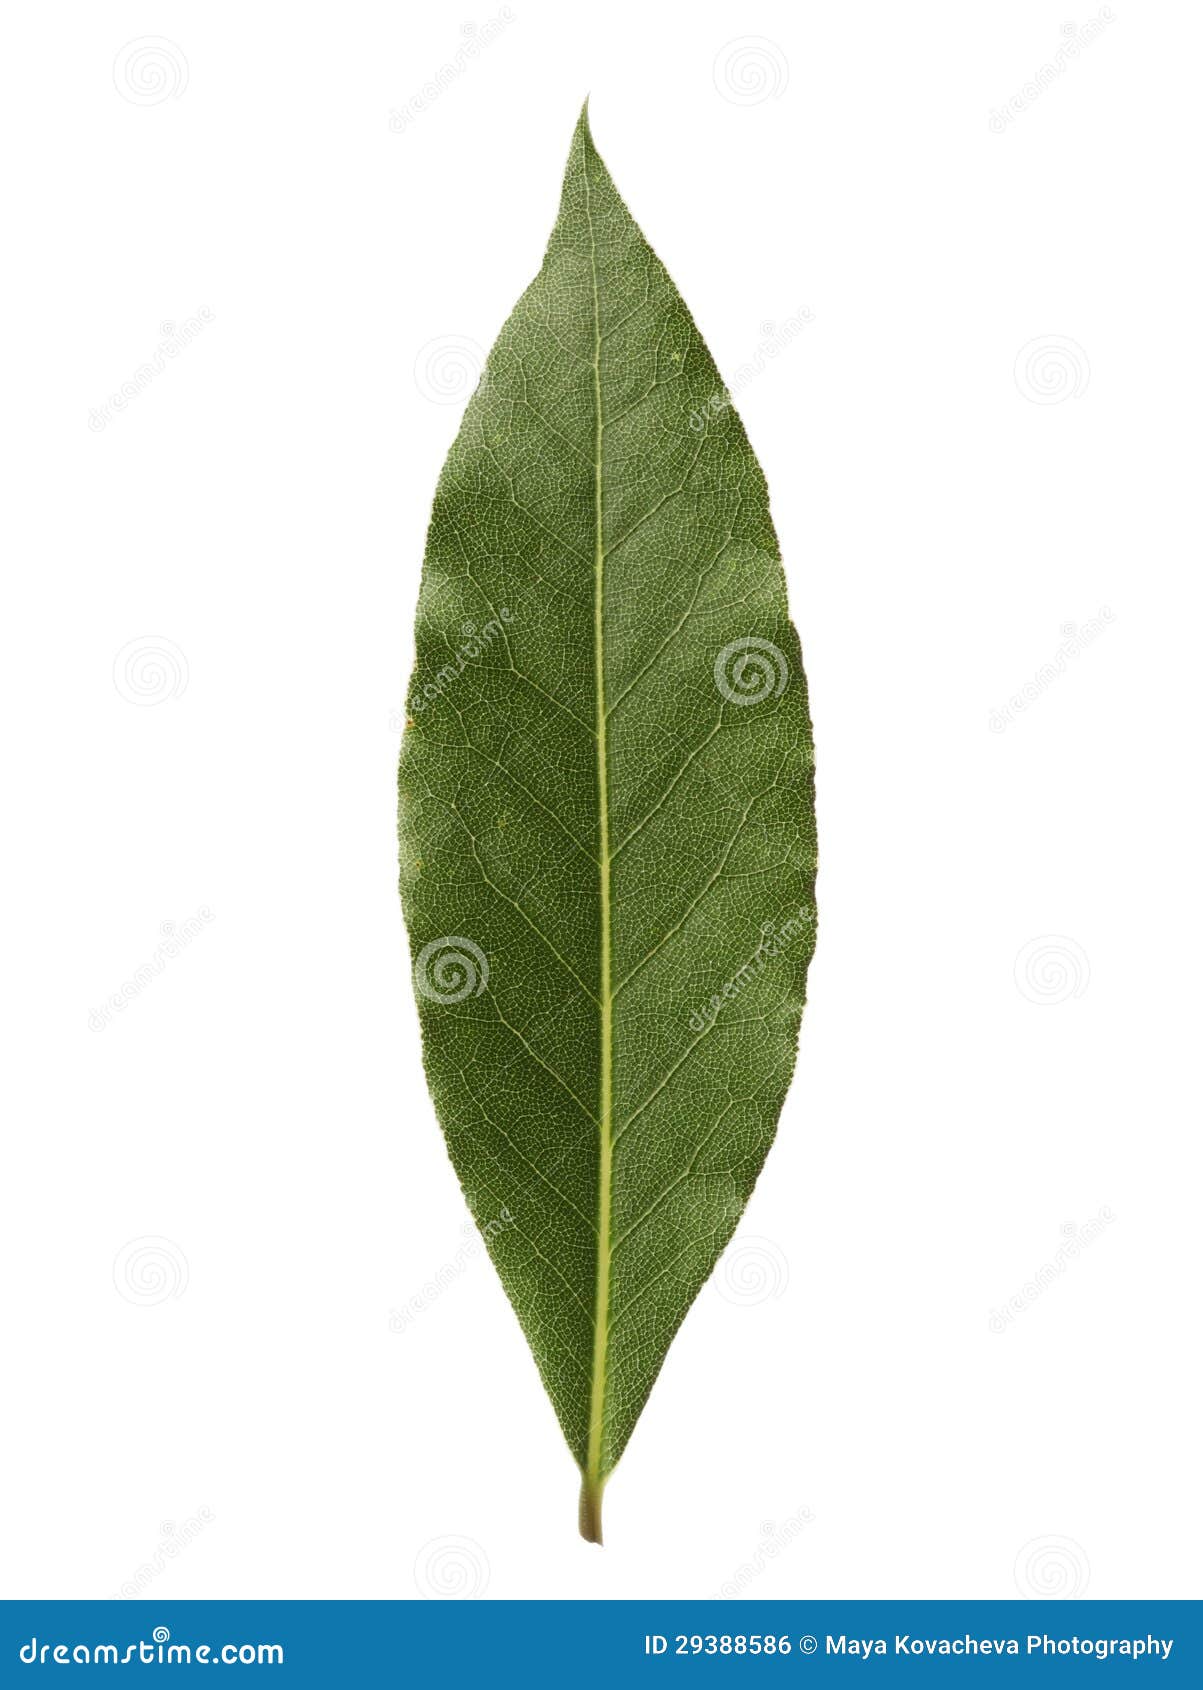 single bay leaf  on white background